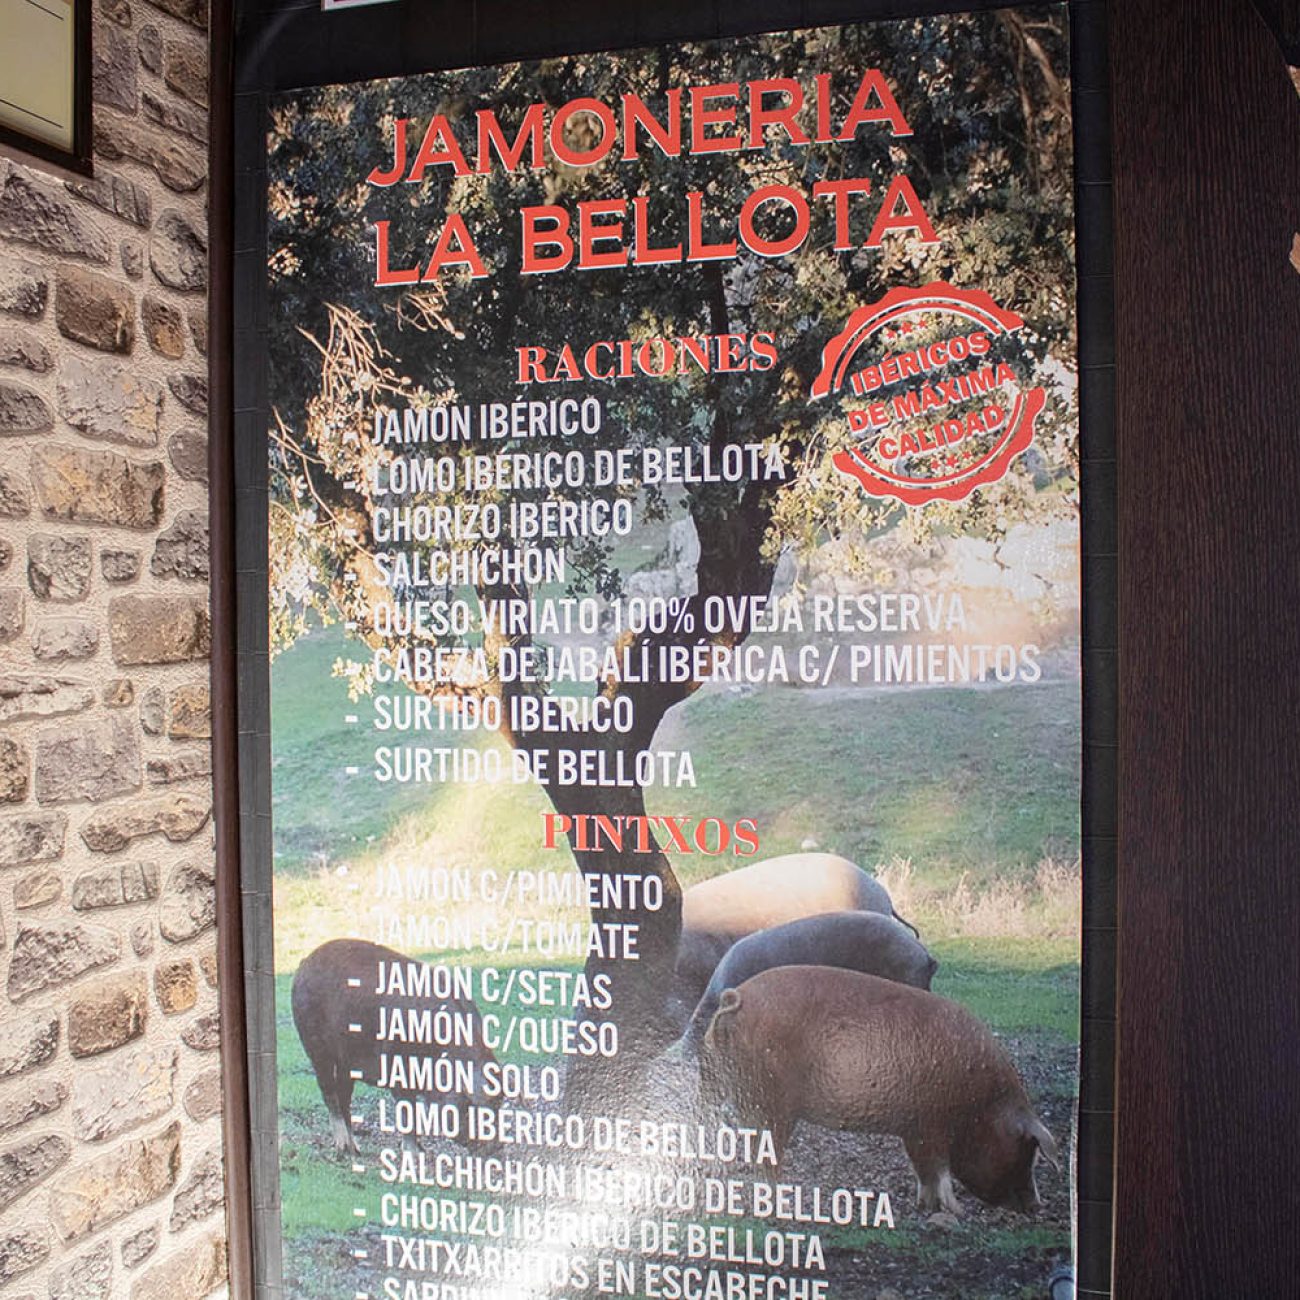 JAMONERIA LA BELLOTA